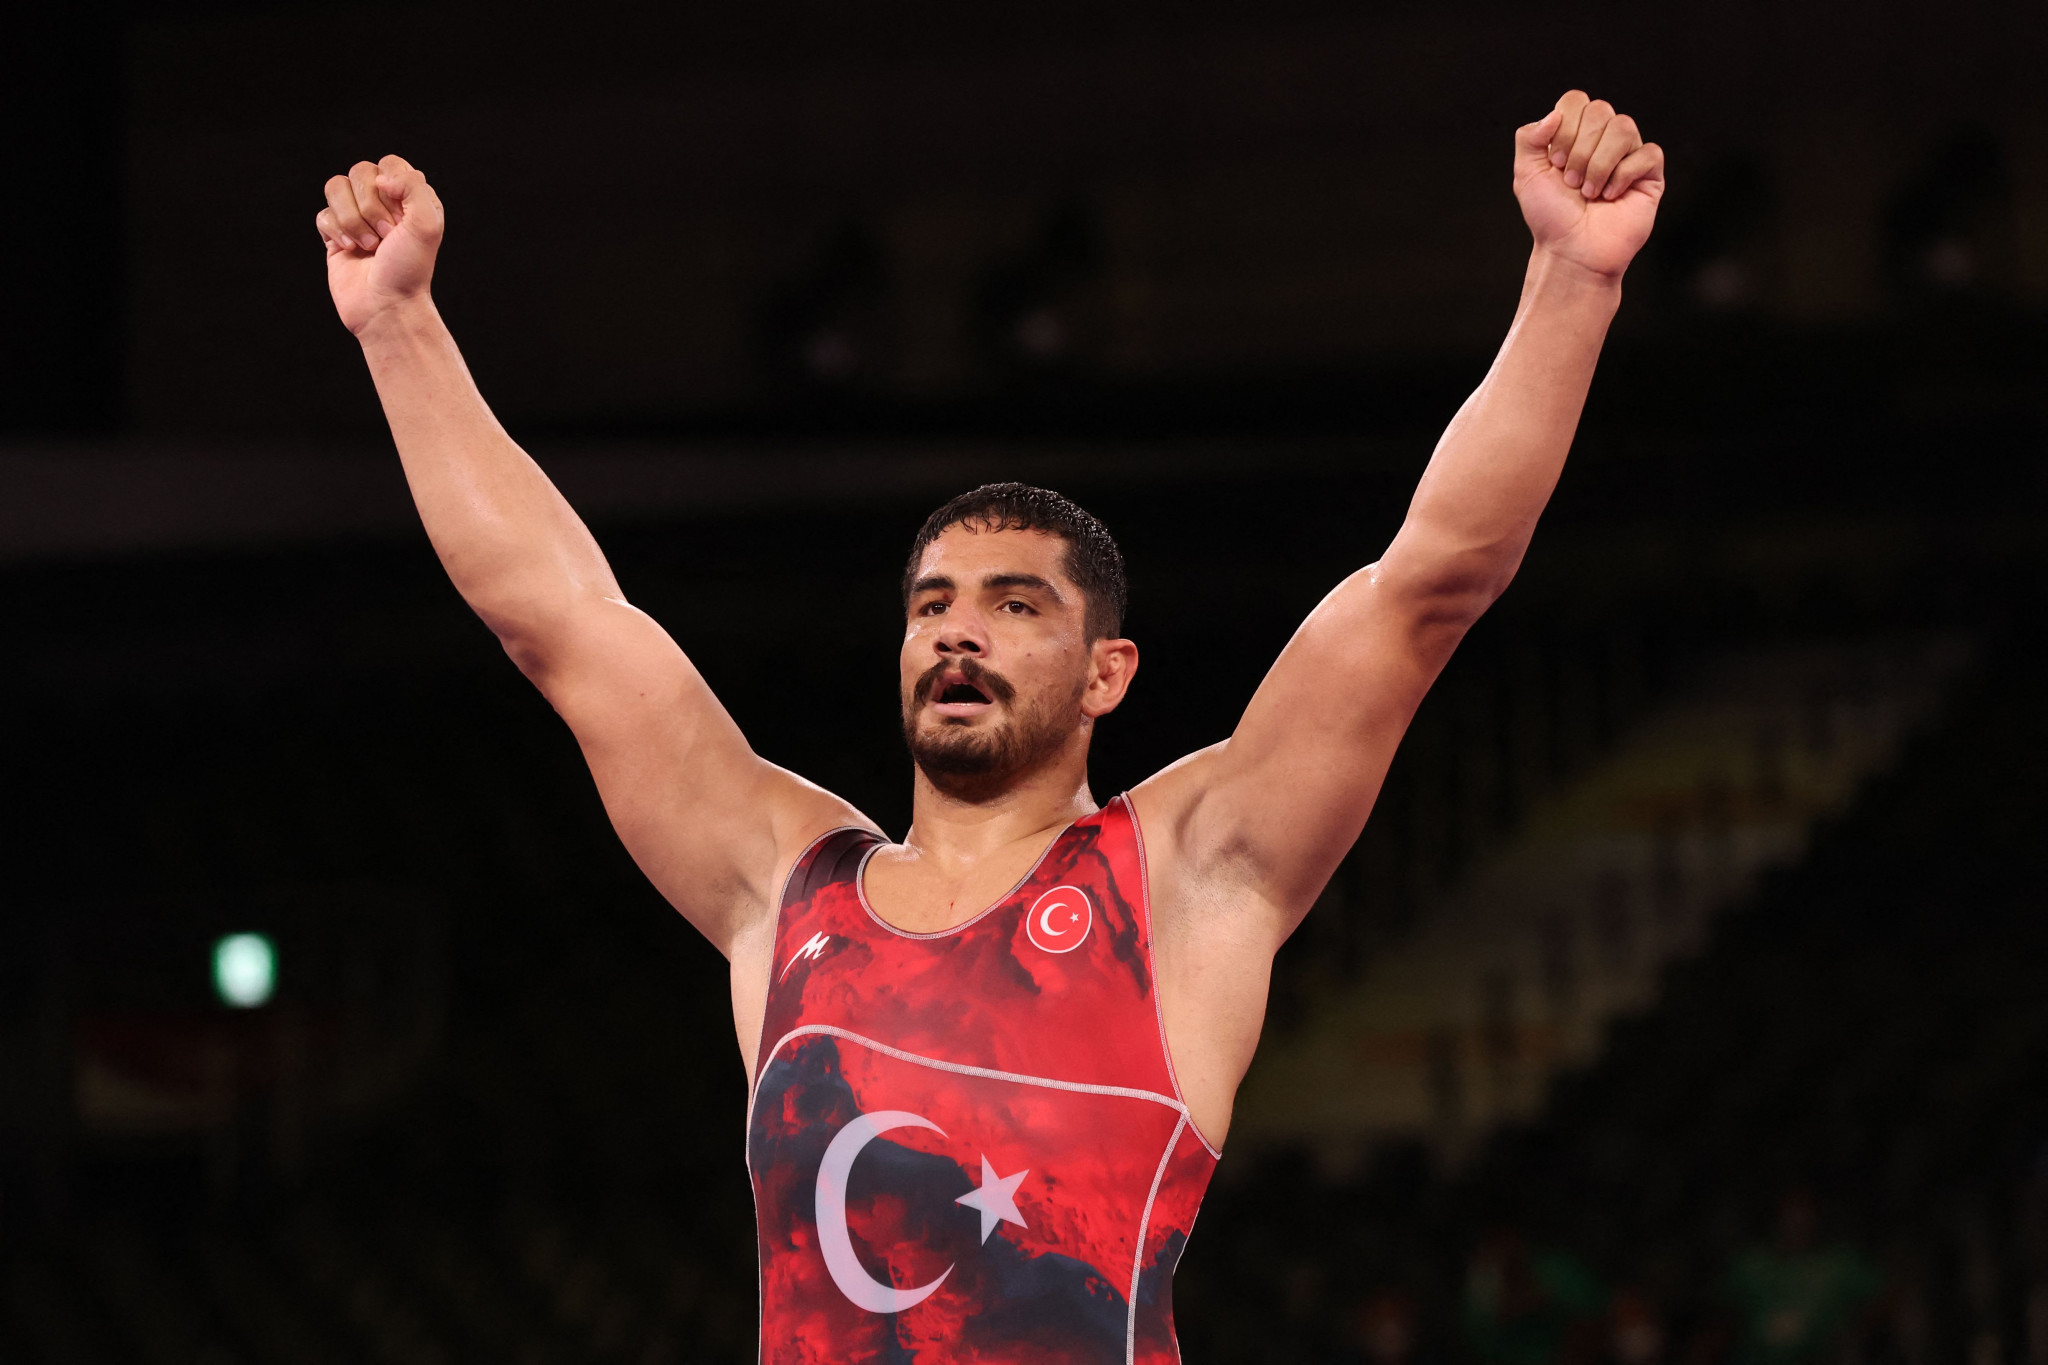 Turkey's Taha Akgül earned his 10th European title by beating Georgia's Geno Petriashvili in Zagreb ©Getty Images